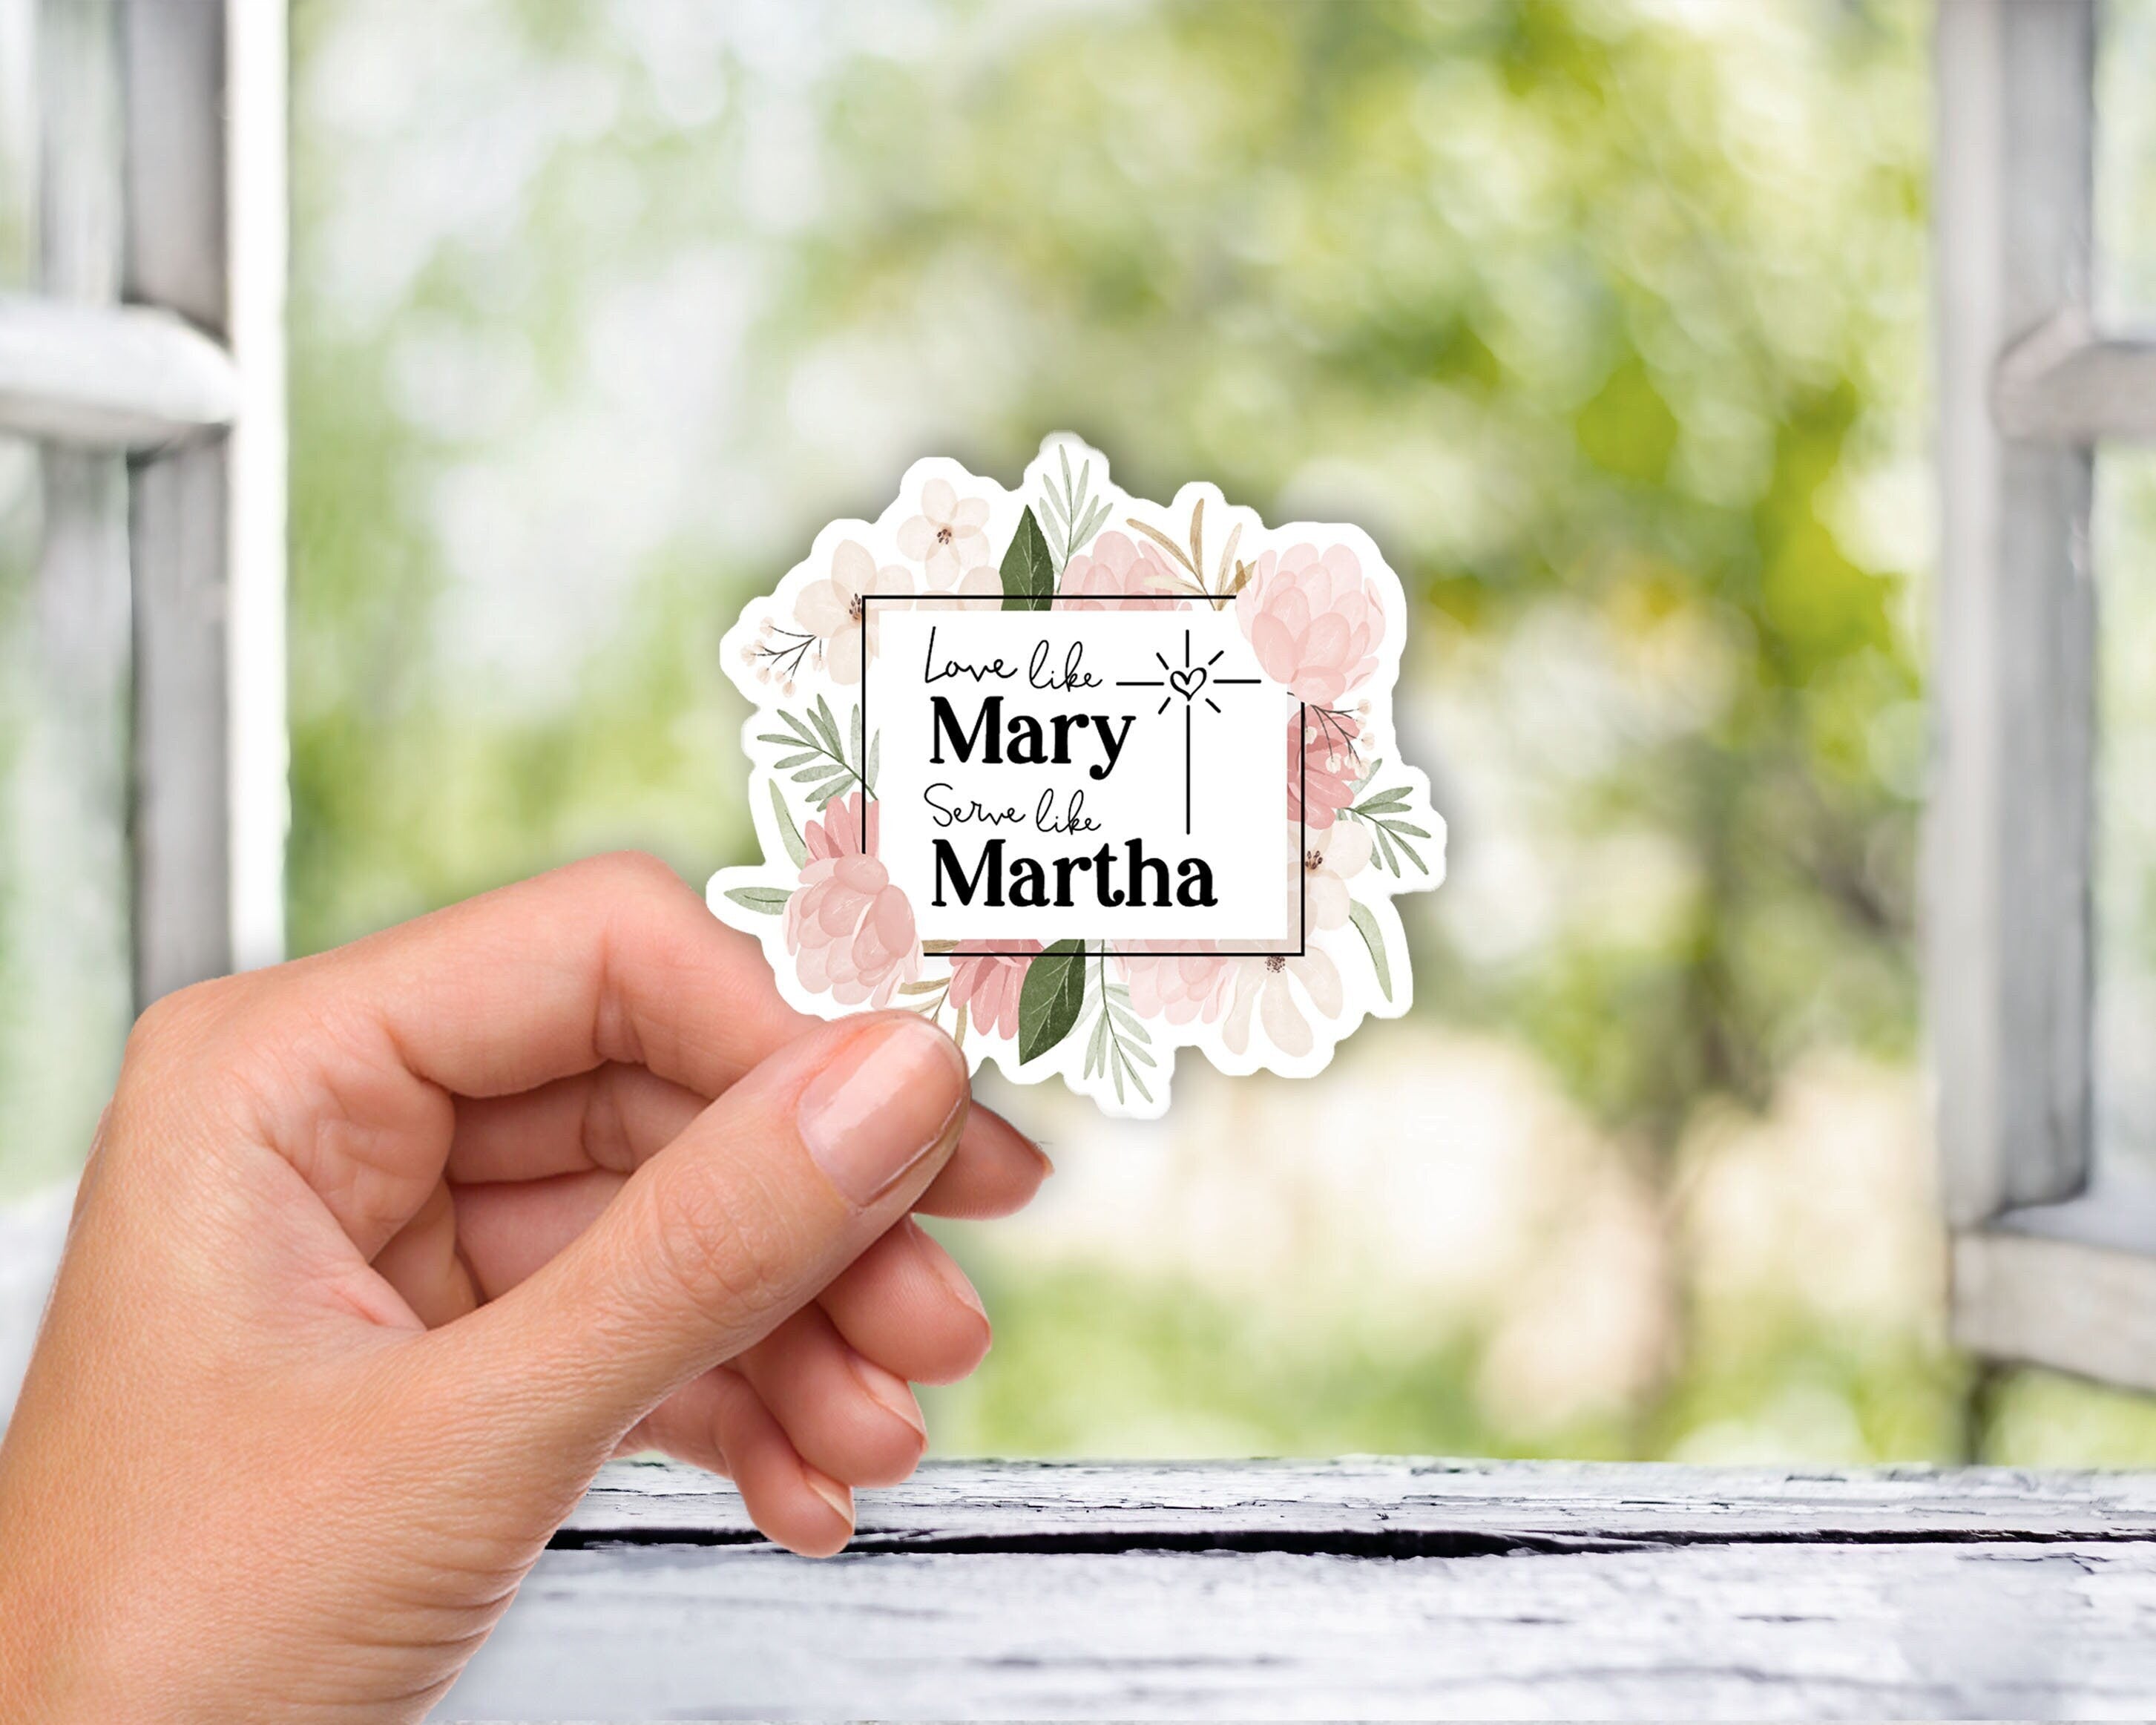 Love Like Mary, Serve Like Martha Sticker - Christian Stickers for Laptop - Catholic Vinyl Waterproof Sticker